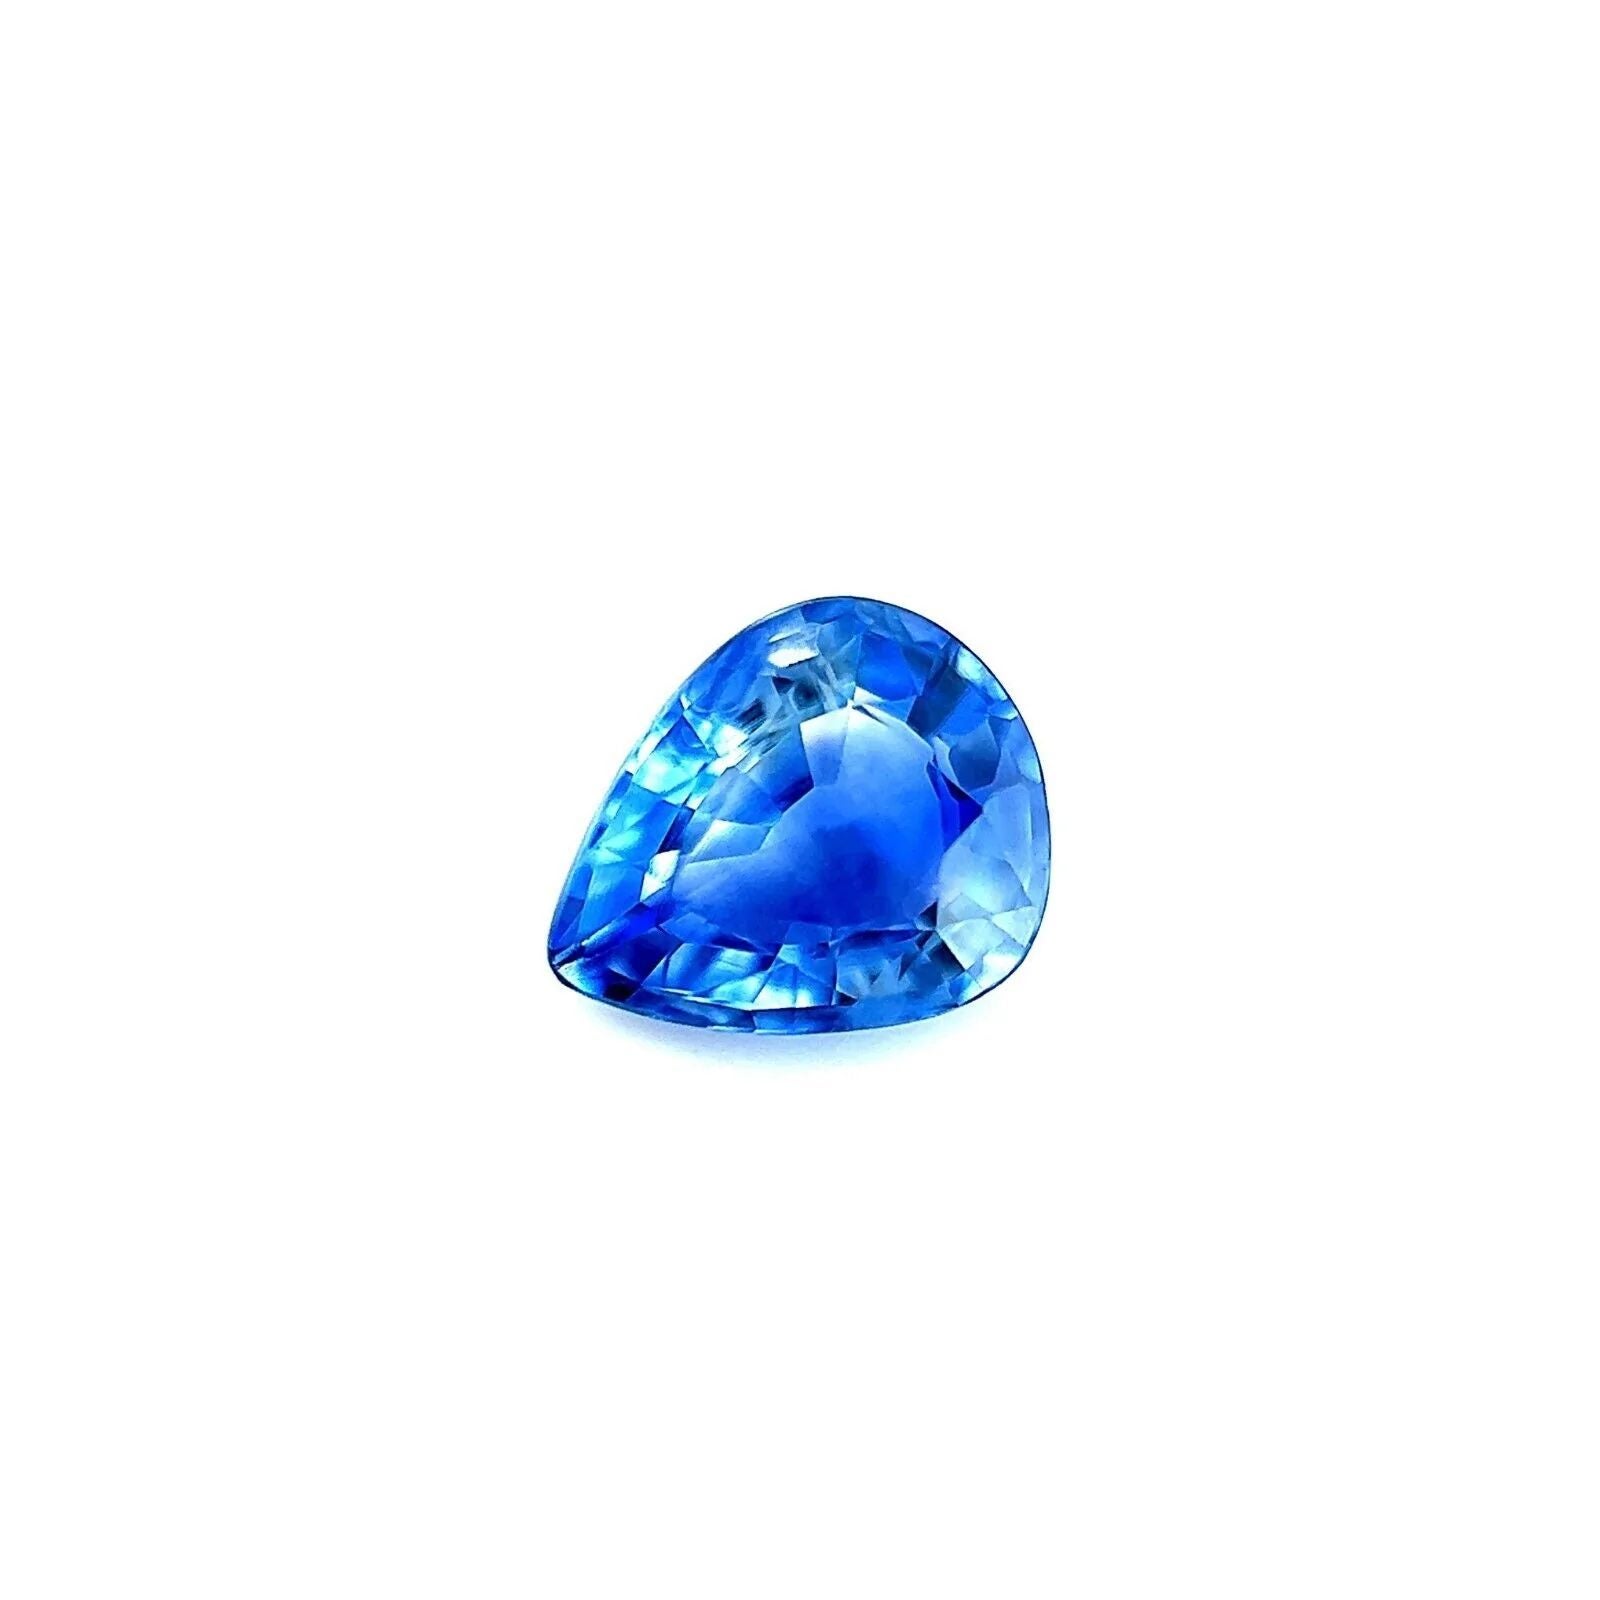 Fine 0.88ct Blue Vivid Sapphire Pear Cut Rare Loose Cut Gemstone For Sale